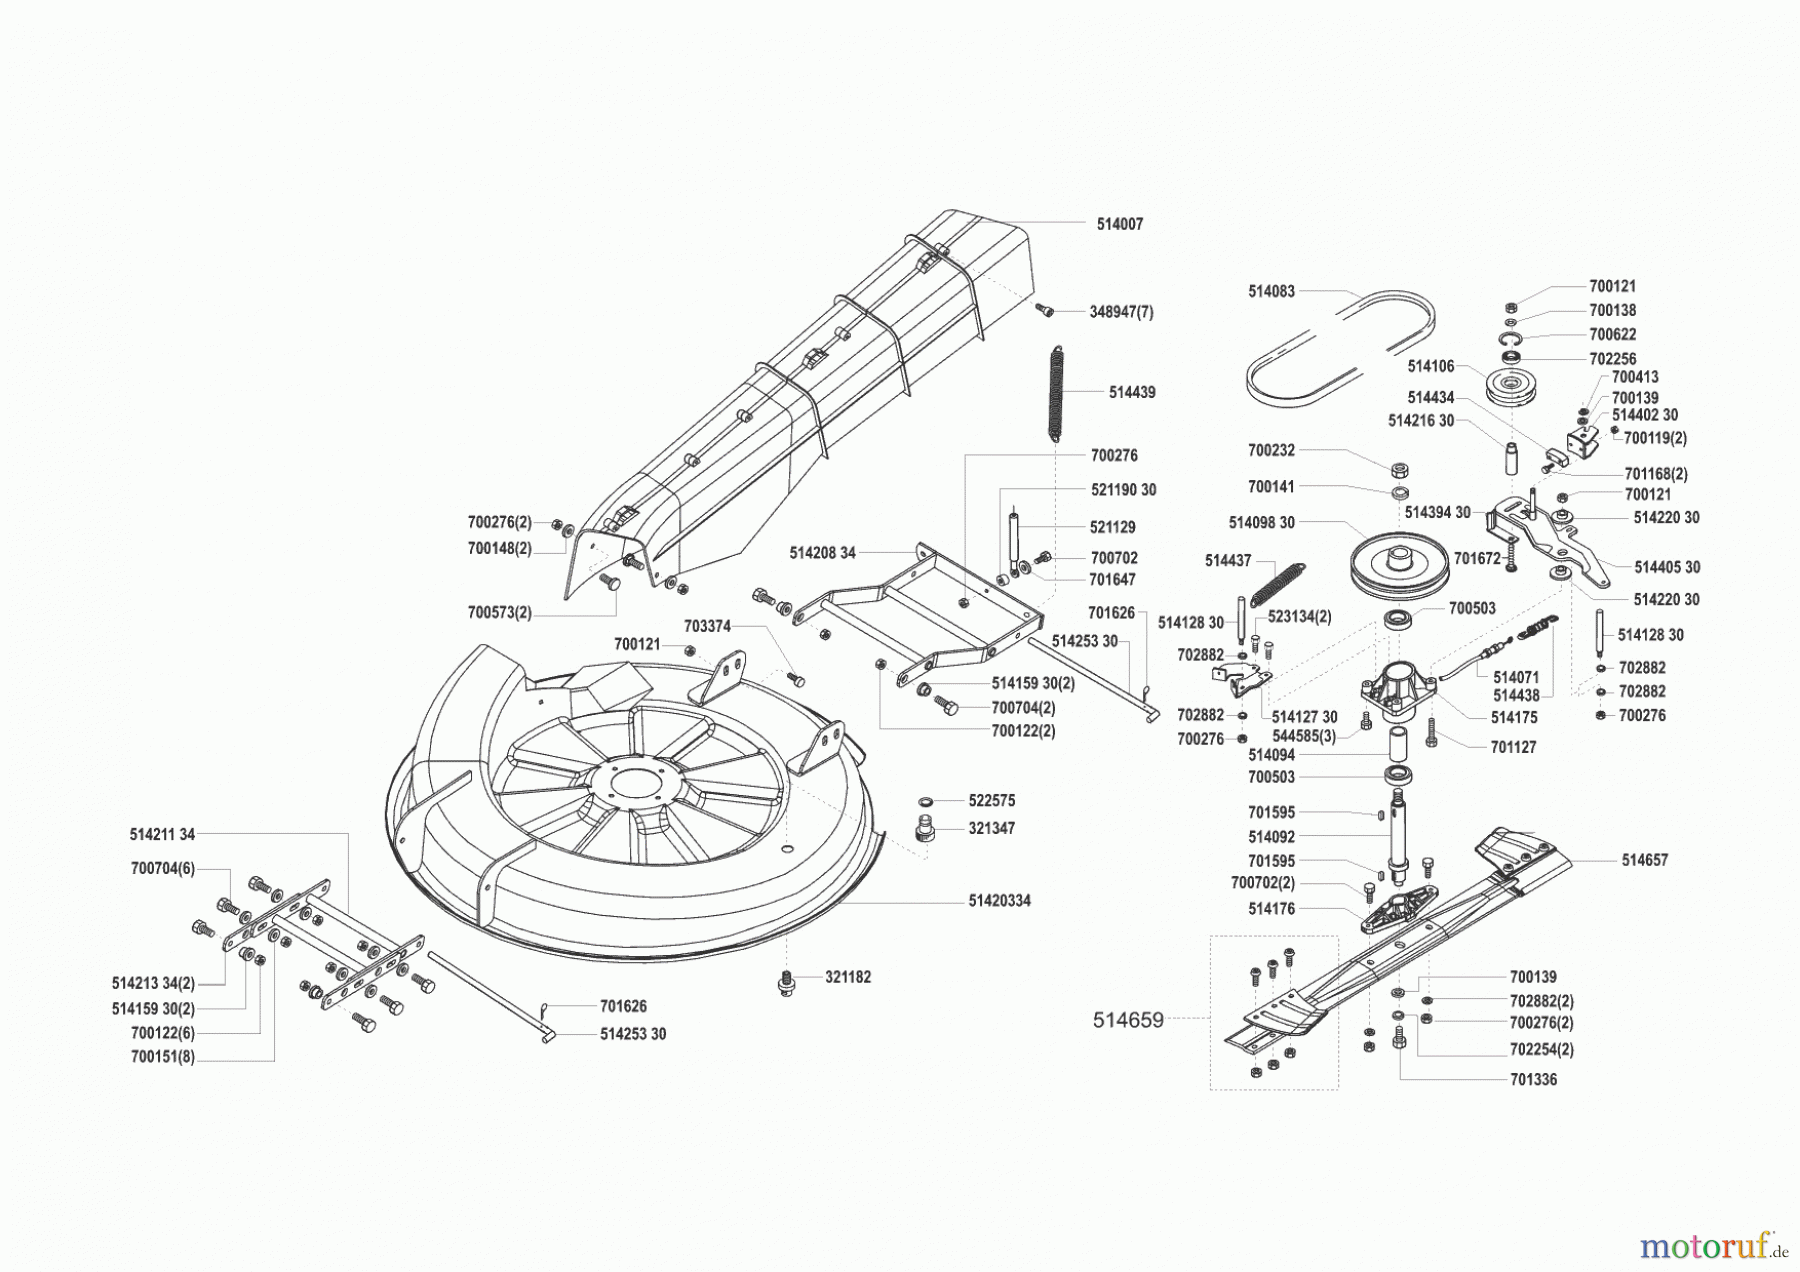  Concord Gartentechnik Rasentraktor T 12-75 ab 10/2000 Seite 5